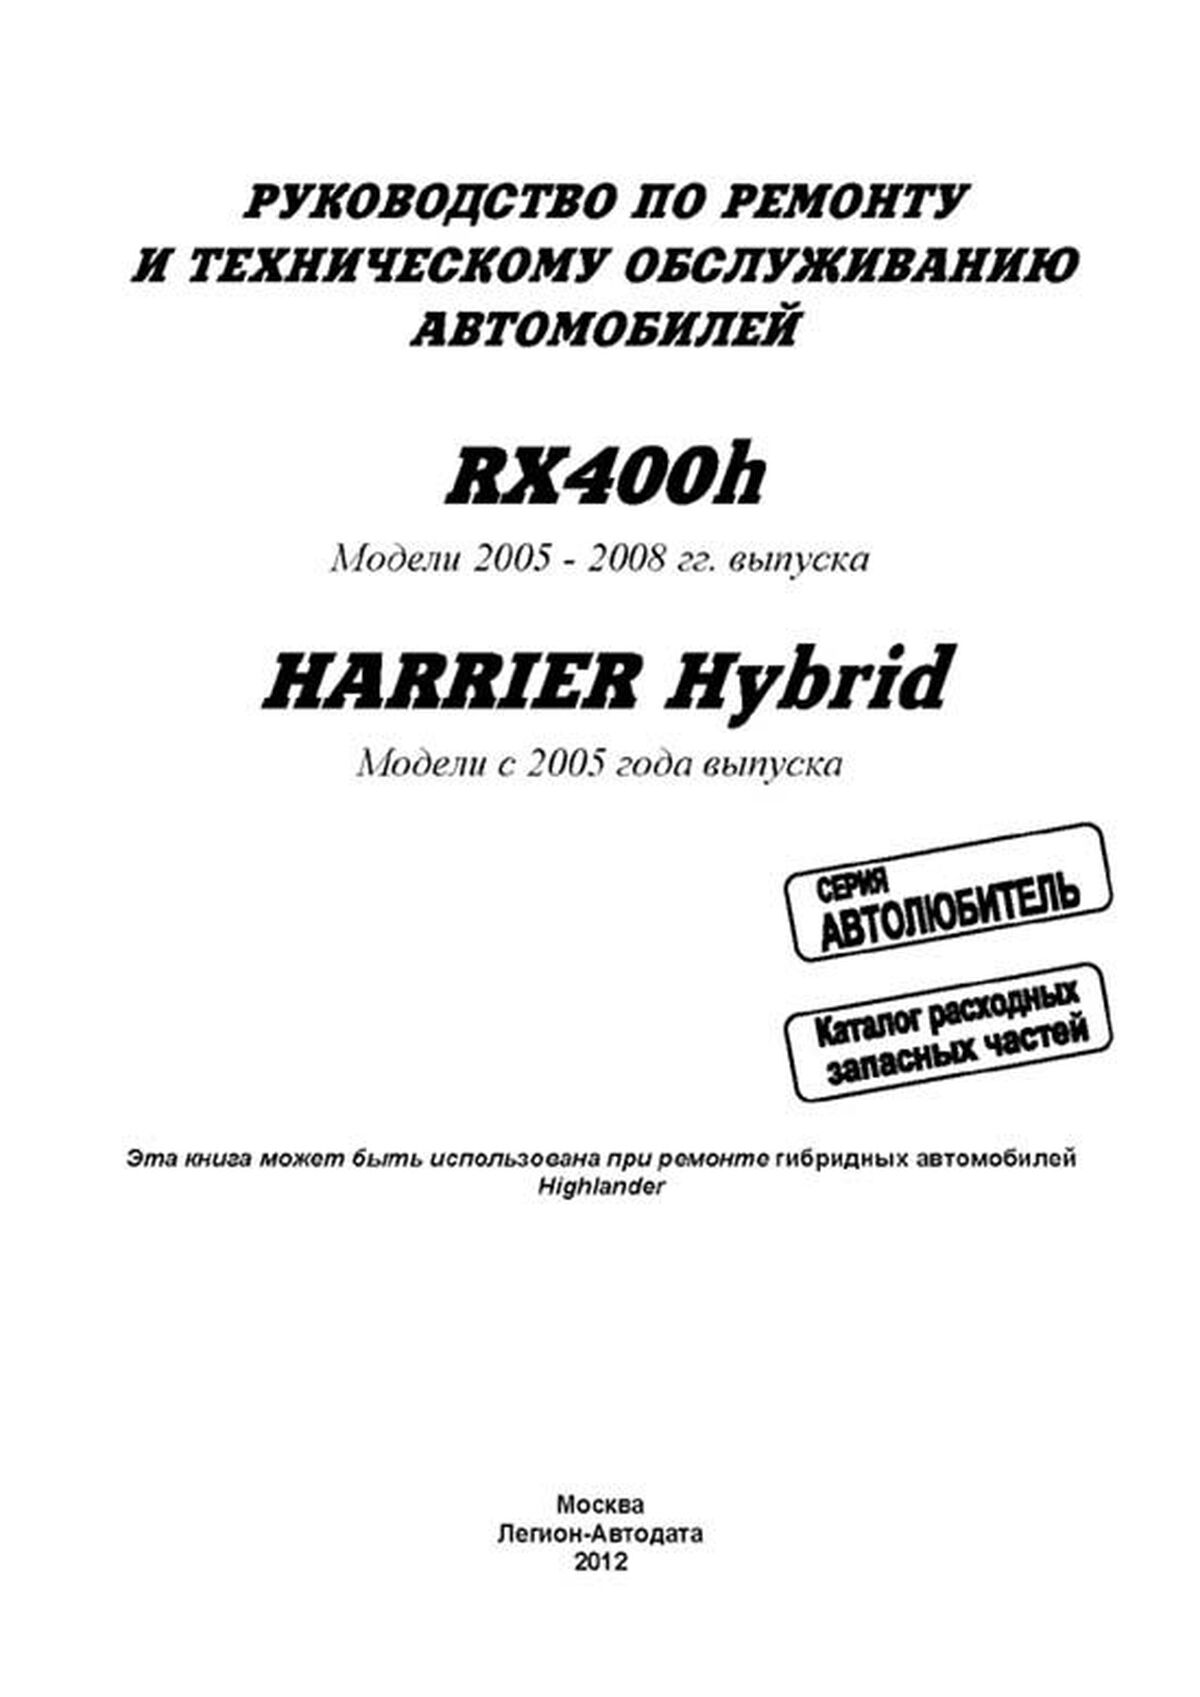 Книга: LEXUS RX400h / TOYOTA HARRIER HYBRYD (гибрид) c 2005 г.в., рем., экспл., то, сер. АВТОЛ. | Легион-Aвтодата